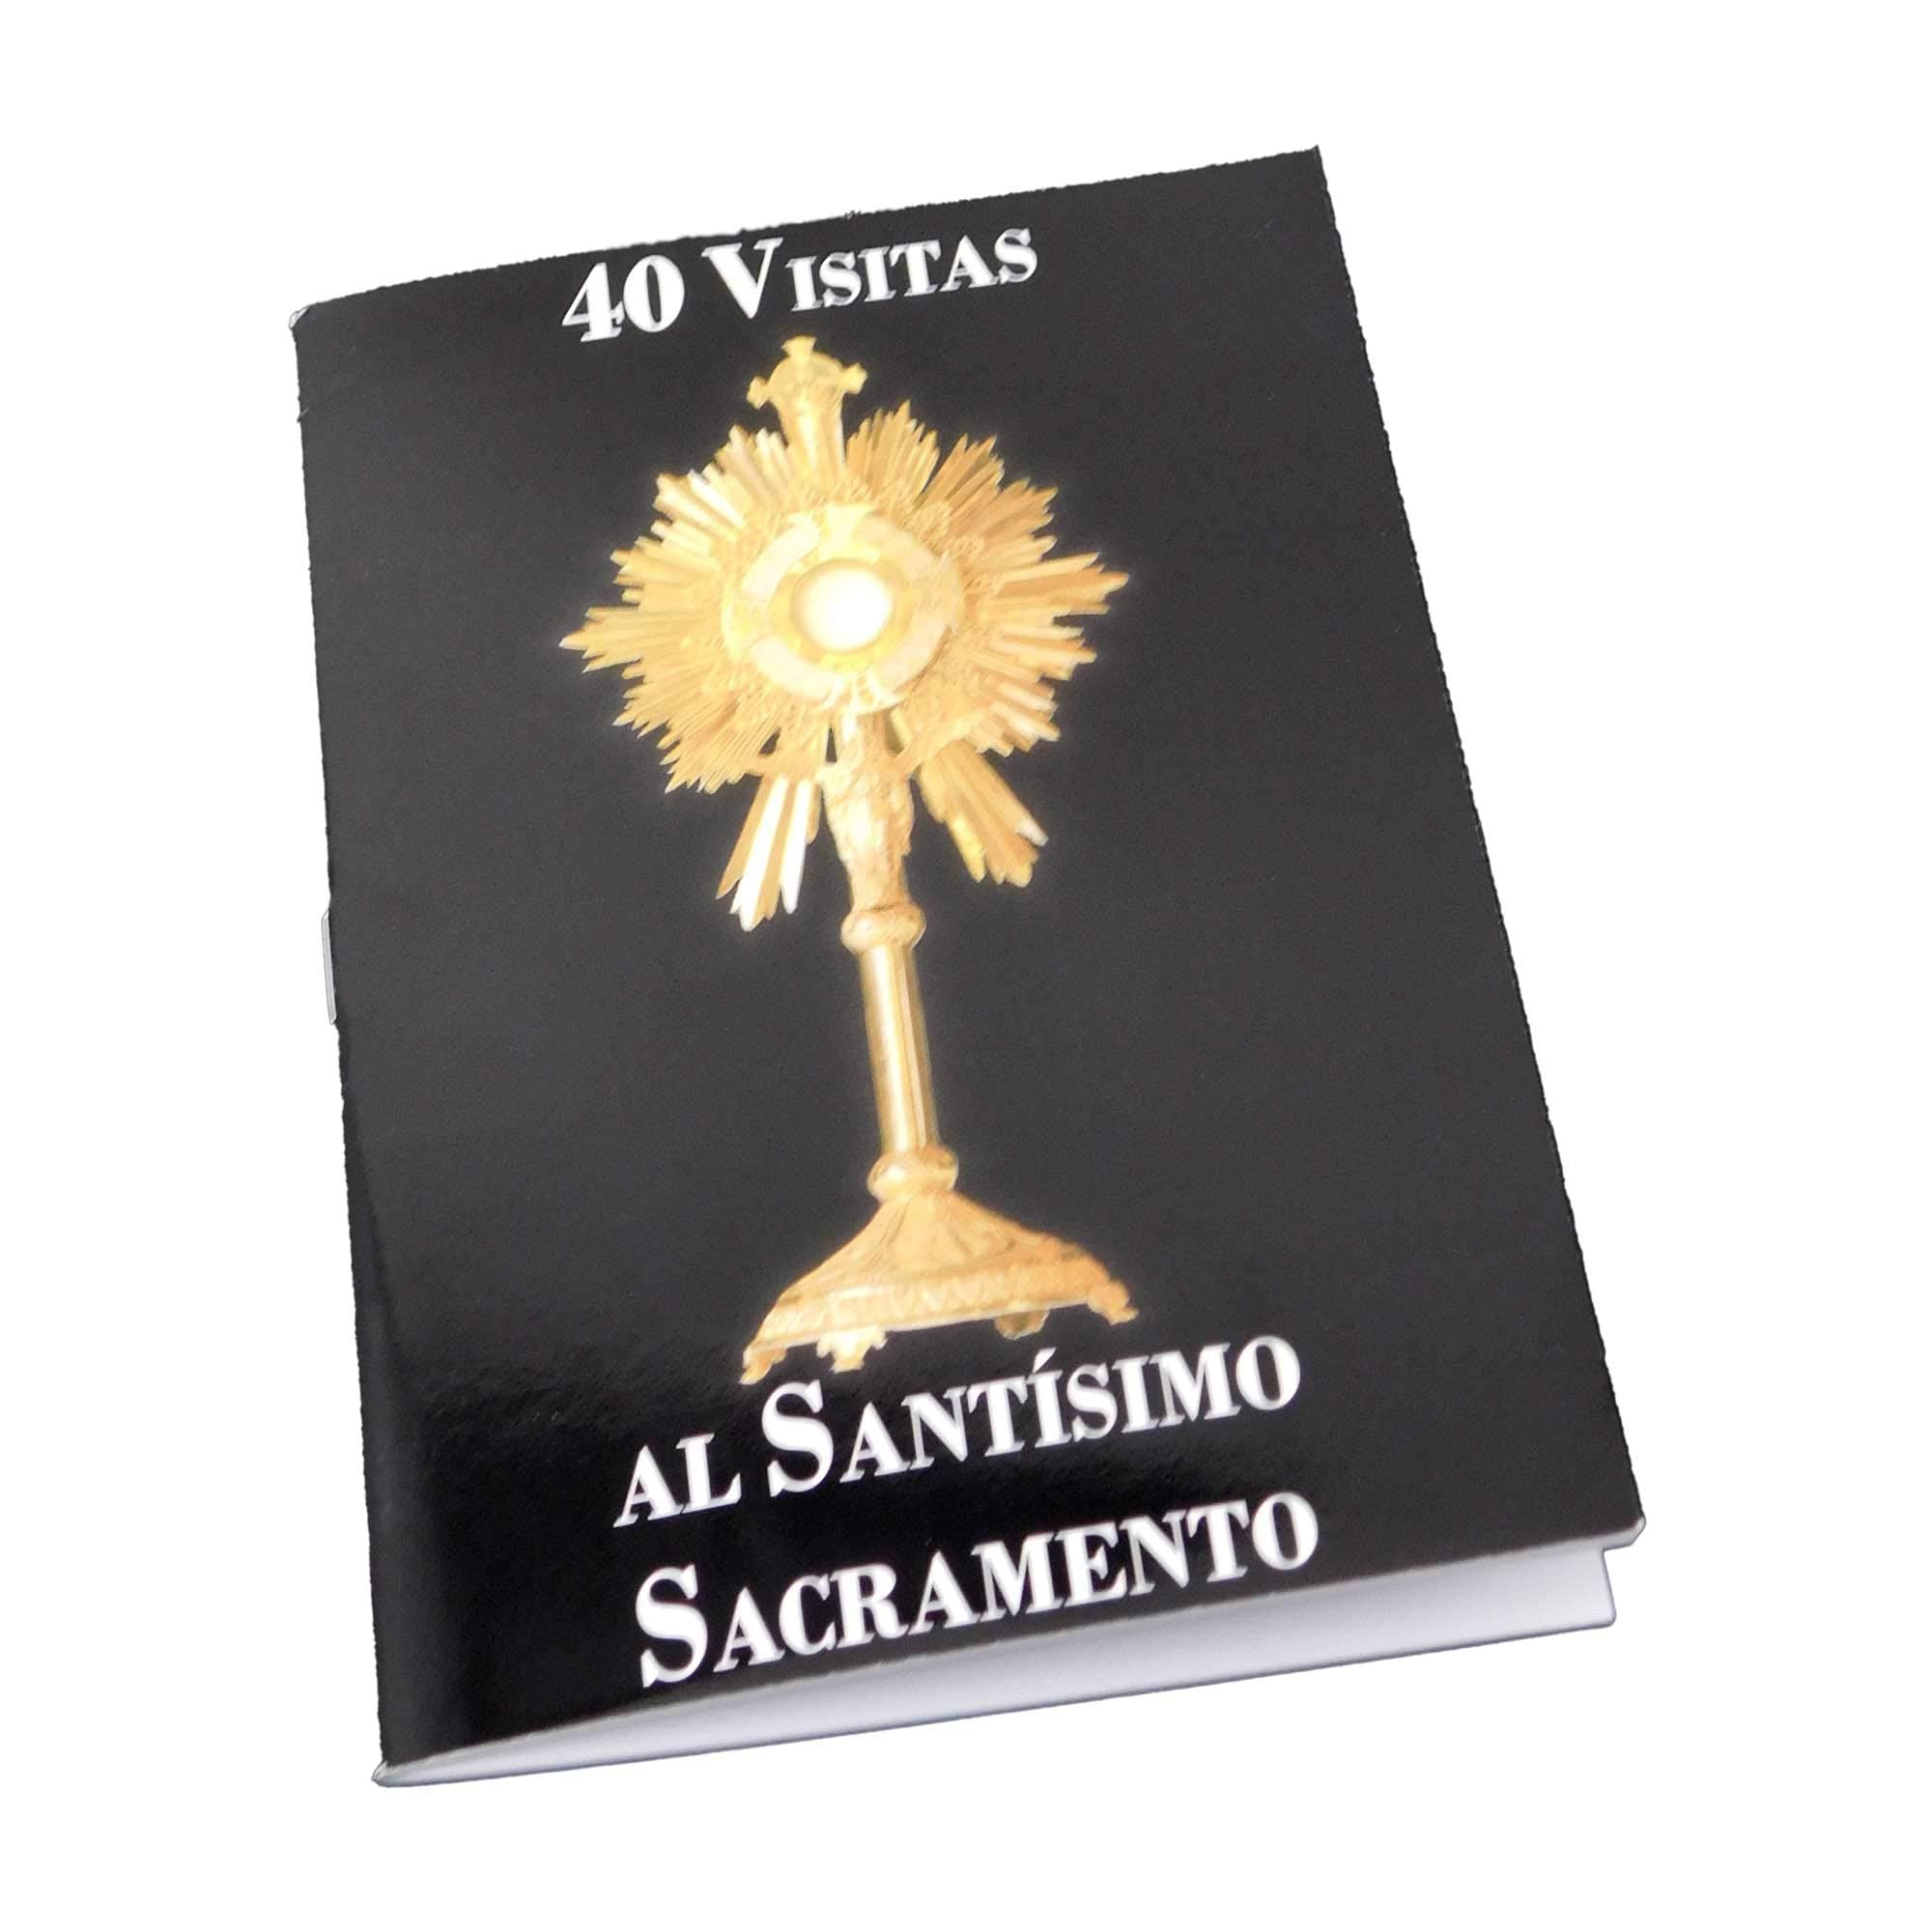 40 Visitas Al Santisimo Sacramento